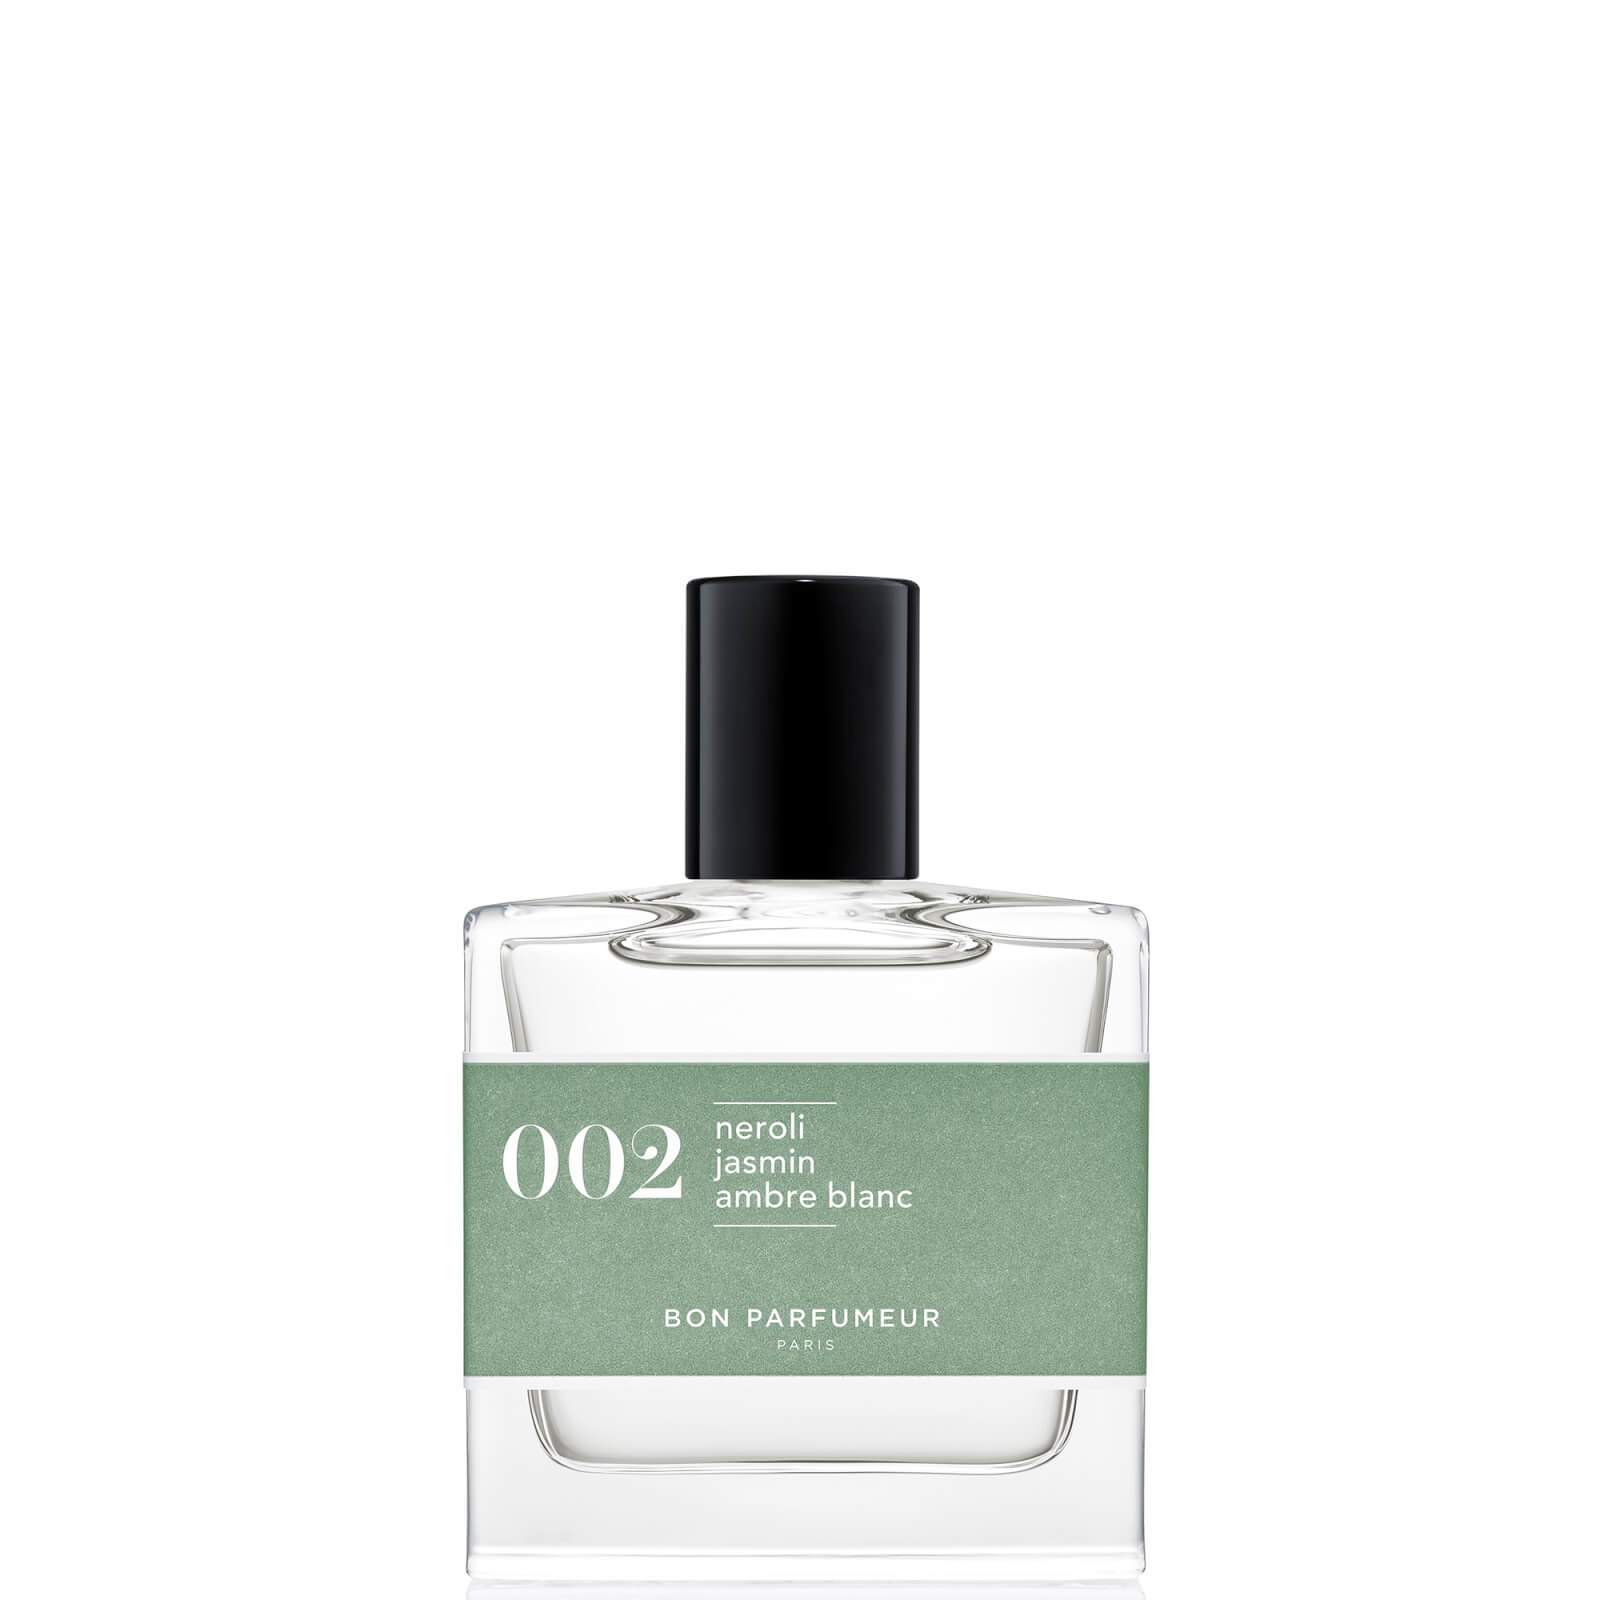 Photos - Women's Fragrance Bon Parfumeur 002 Neroli, Jasmine, White Amber Eau de Parfum - 30ml BP002C 